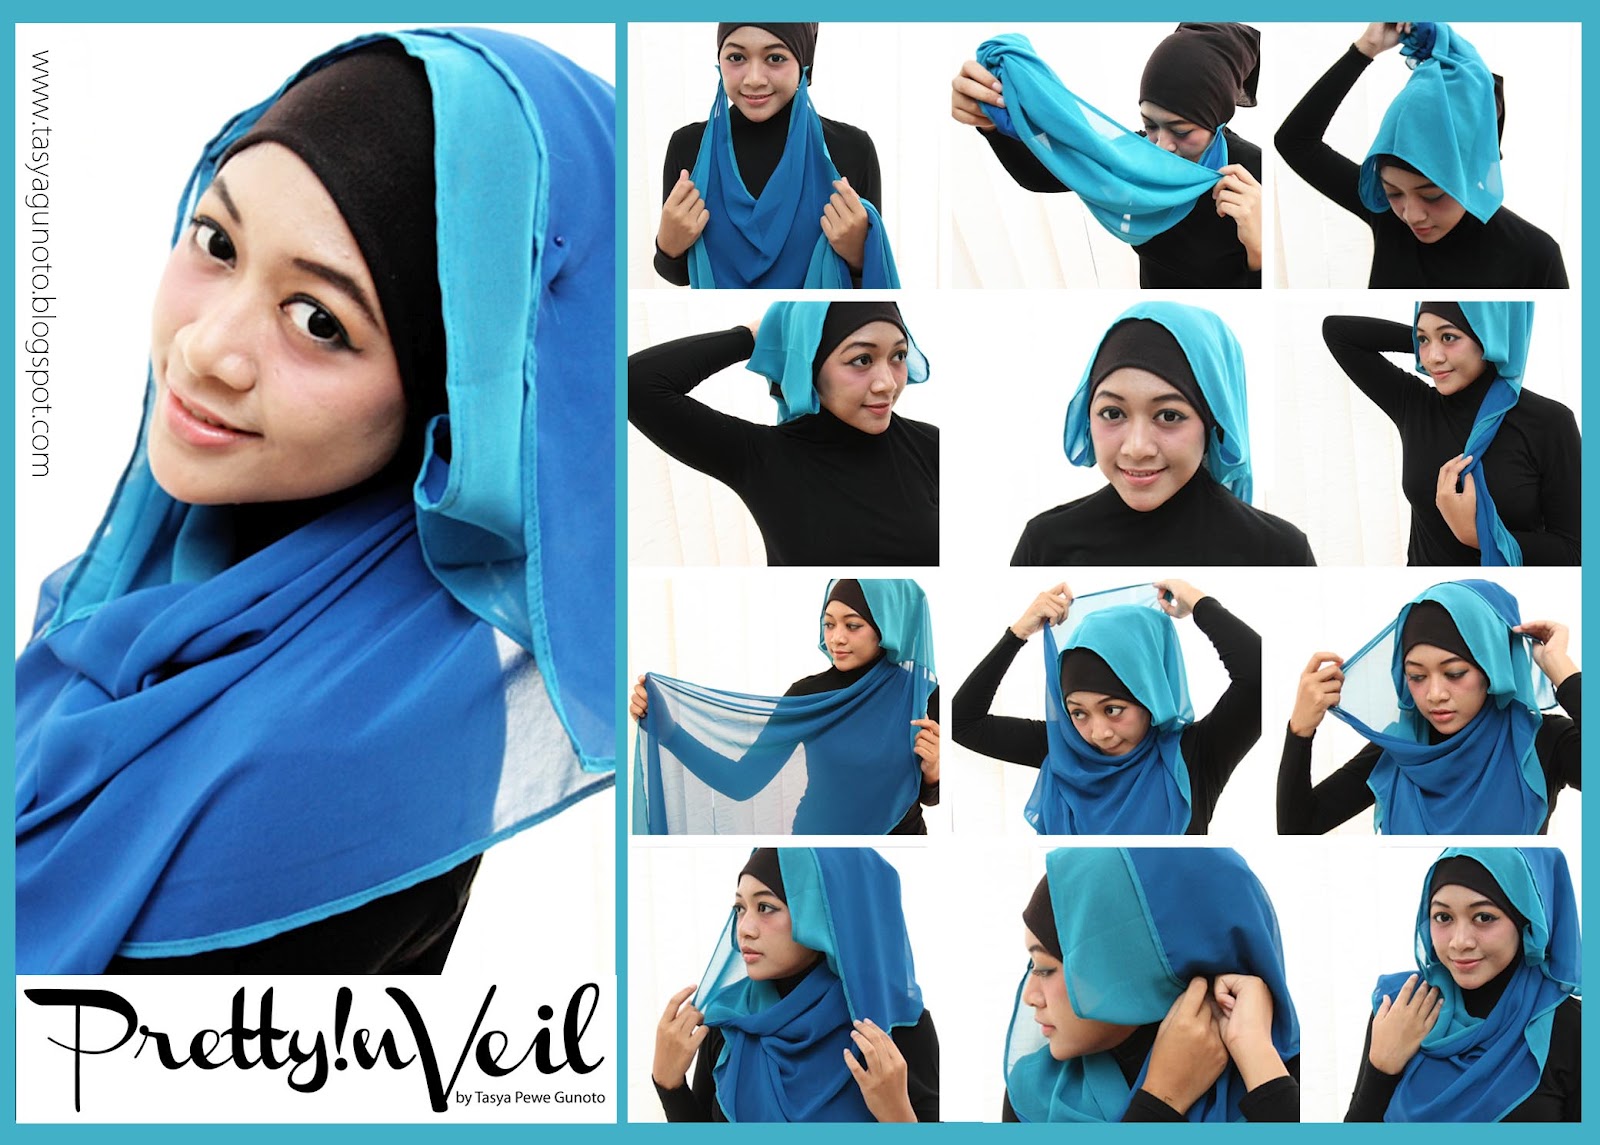 Tutorial Hijab Segi Empat Jaman Sekarang Tutorial Hijab Paling